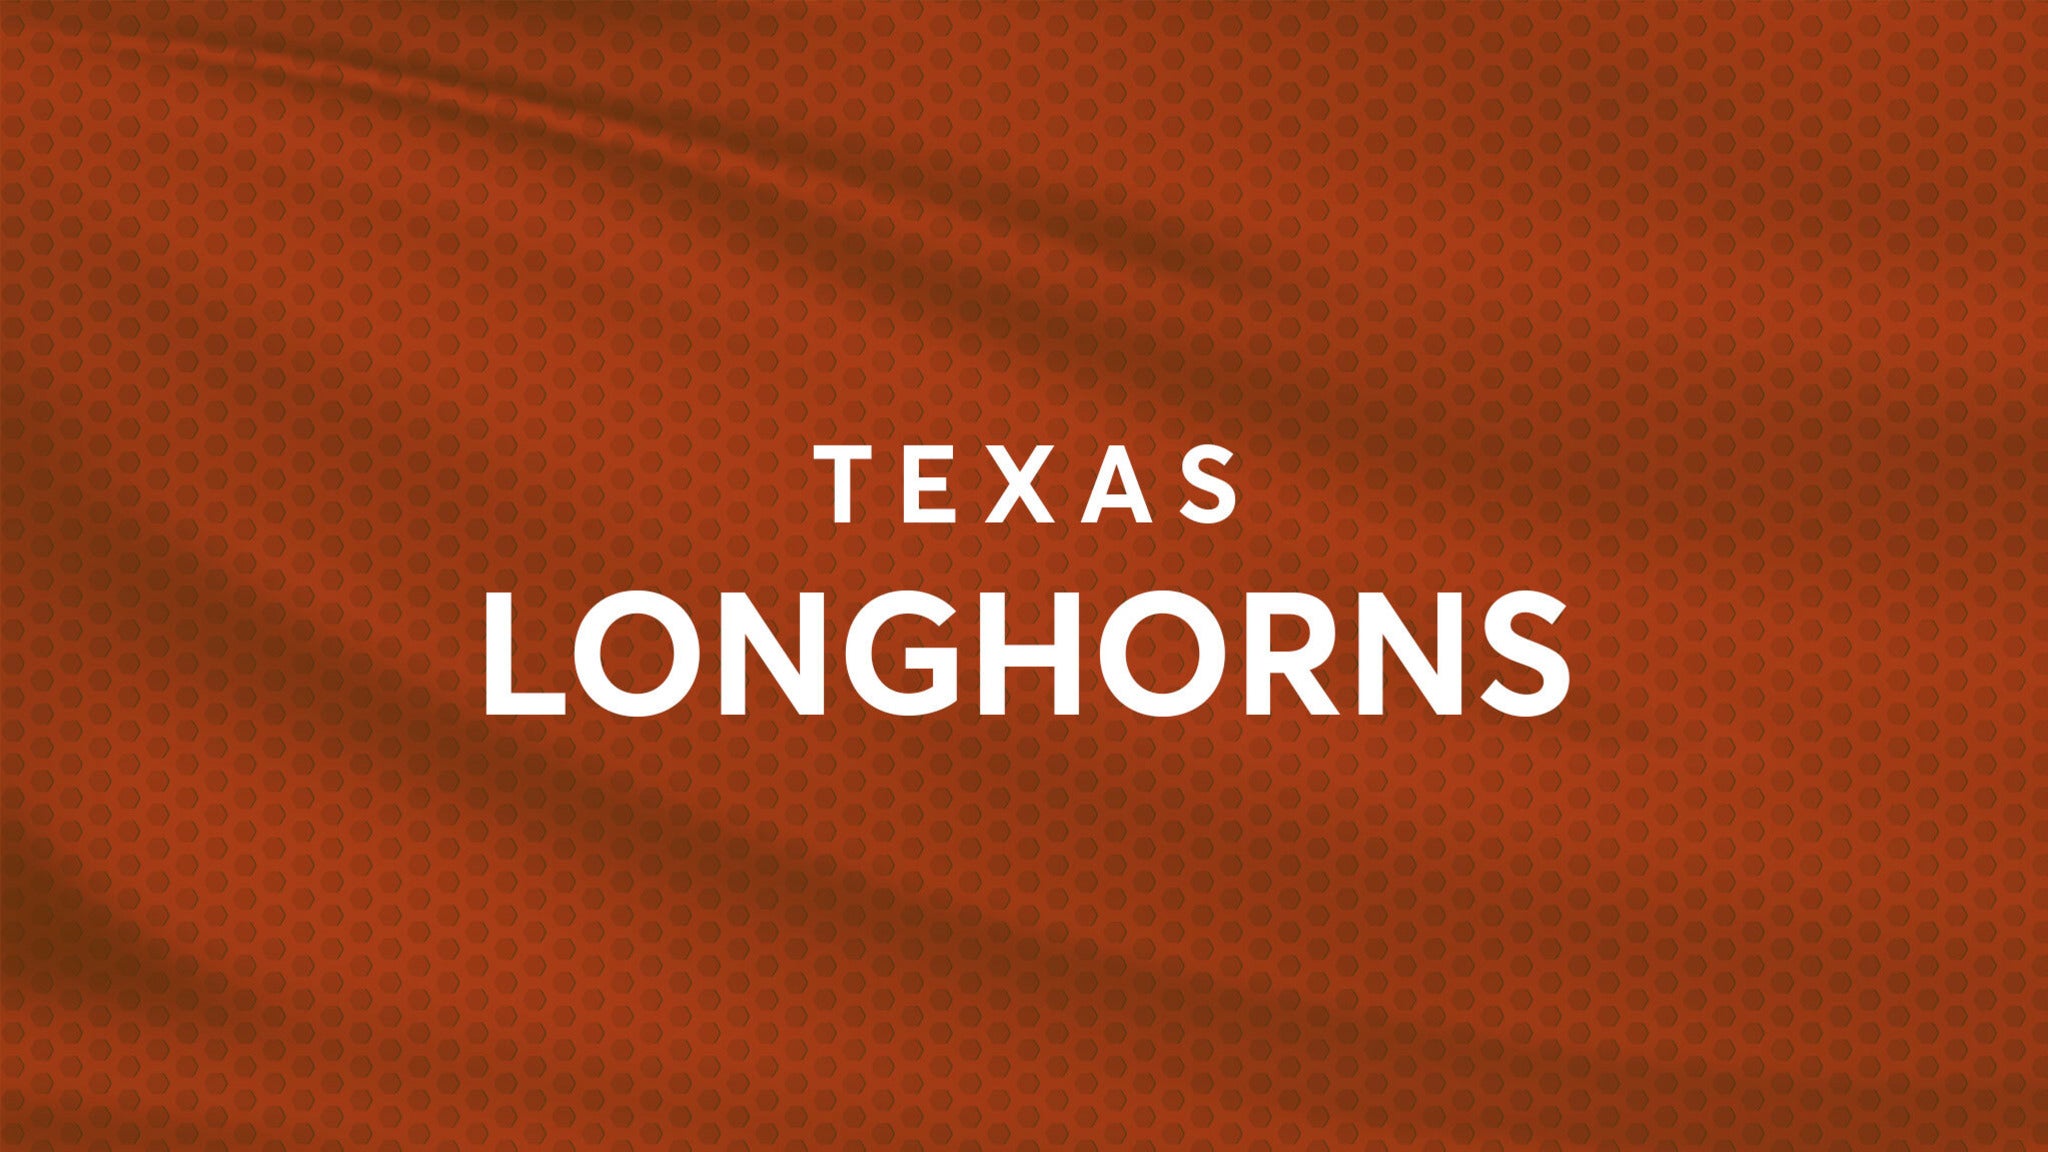 Texas Longhorns Football vs. Oklahoma State Cowboys Football